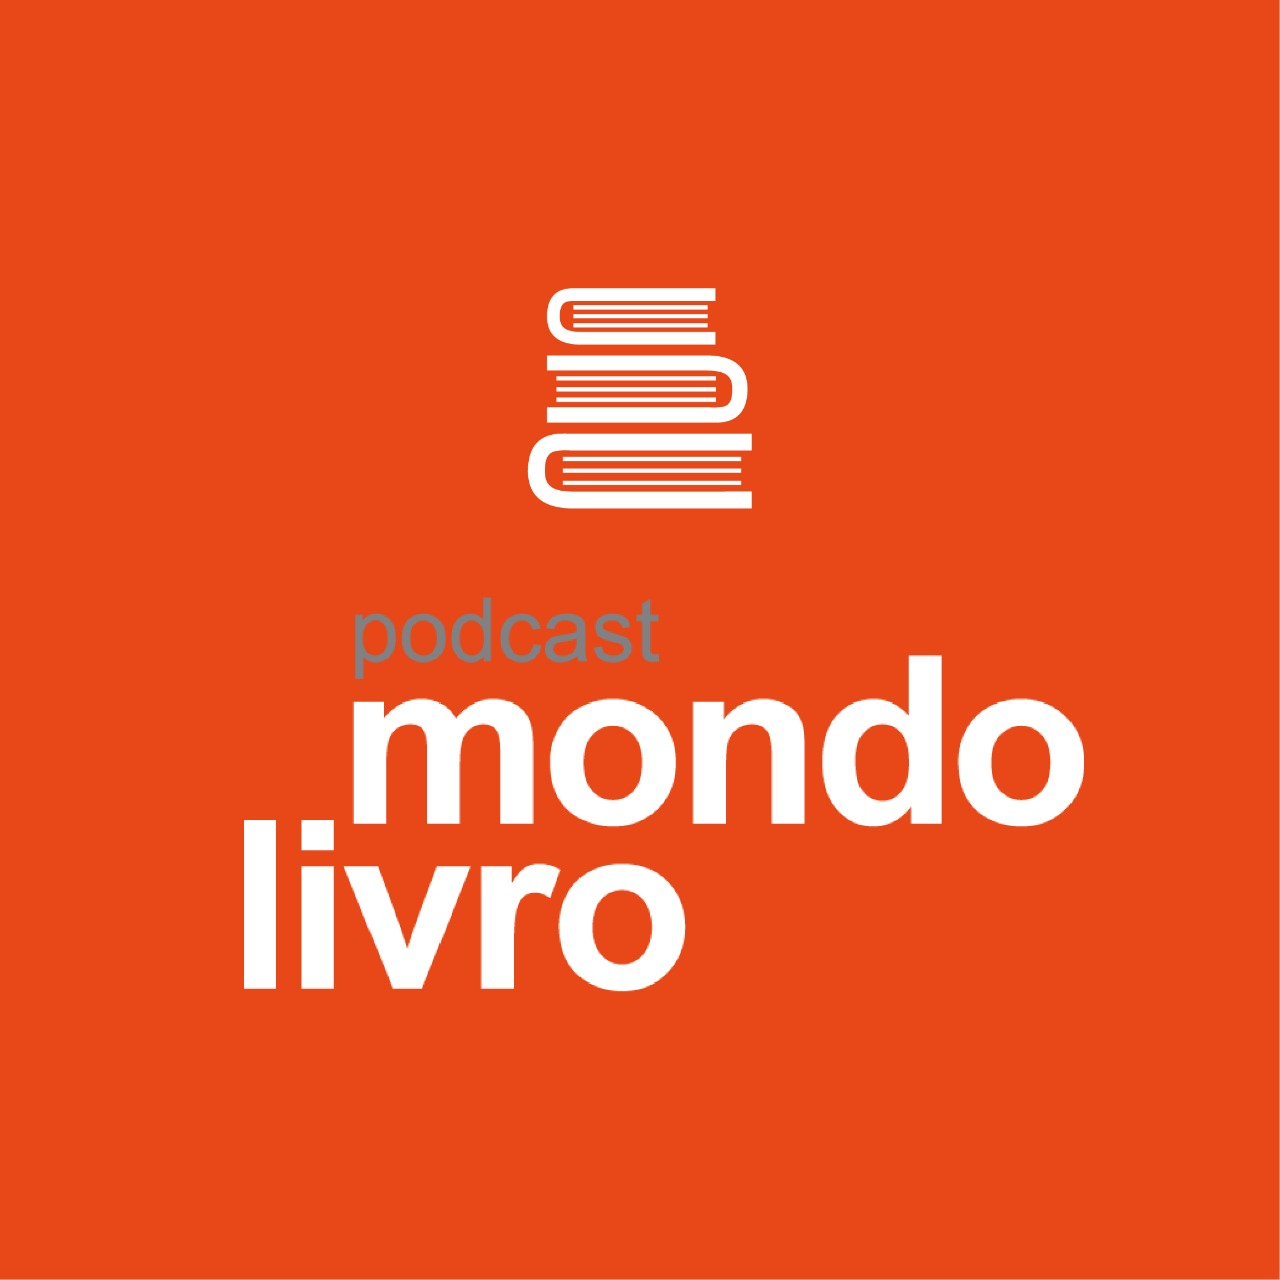 Mondolivro Podcast - Juan Pablo Villalobos no Mondolivro Podcast